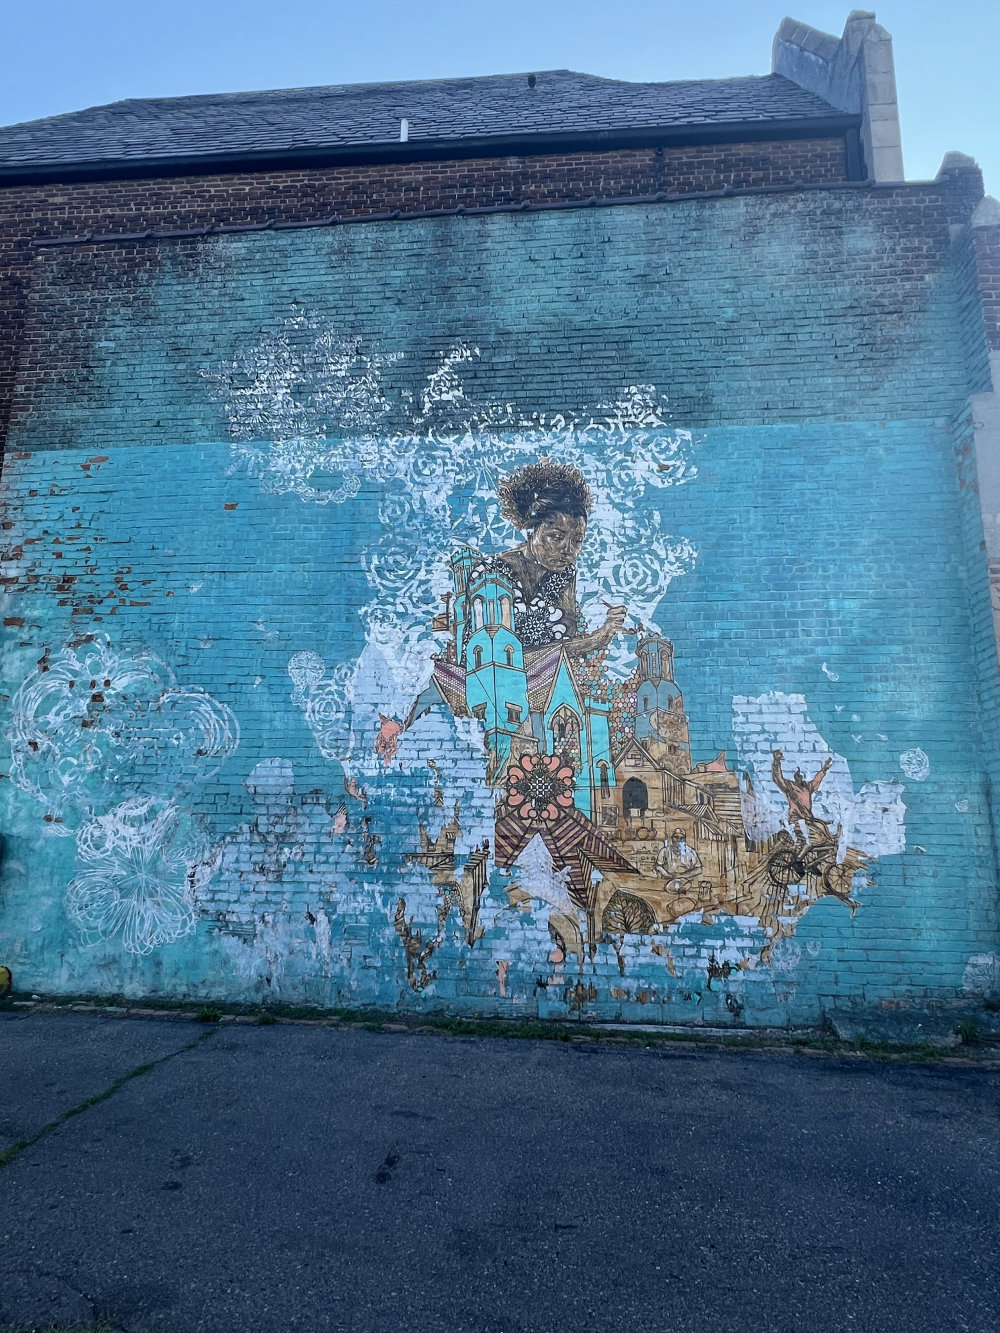 mural in Detroit by artist Swoon.